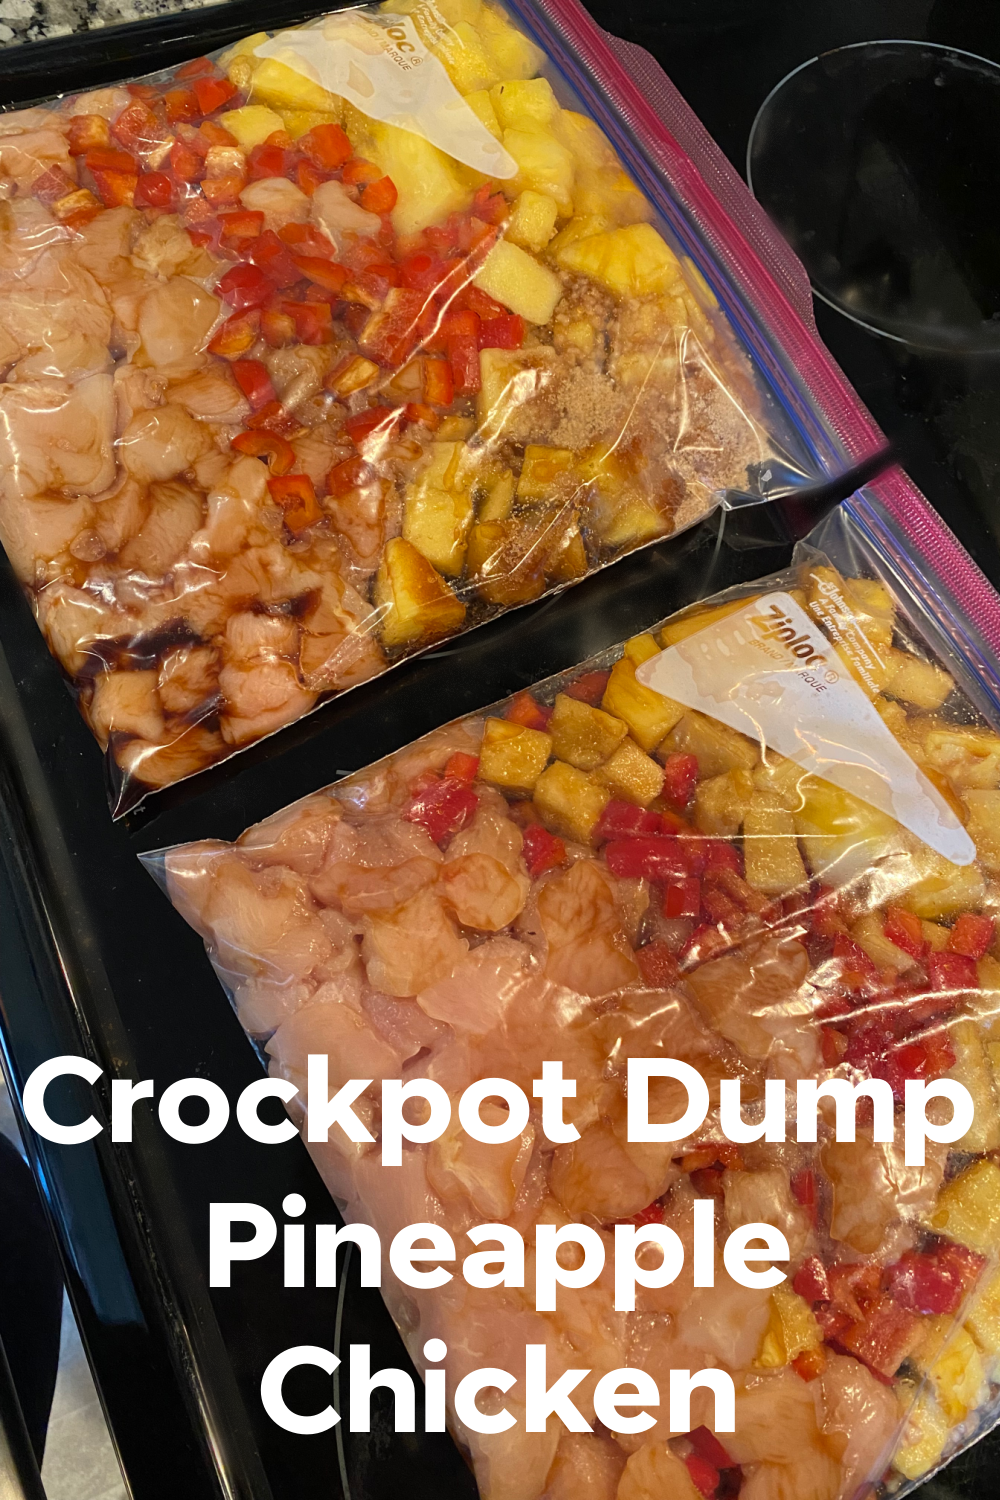 ingredients for crockpot pineapple chicken in ziploc bags ready for freezer